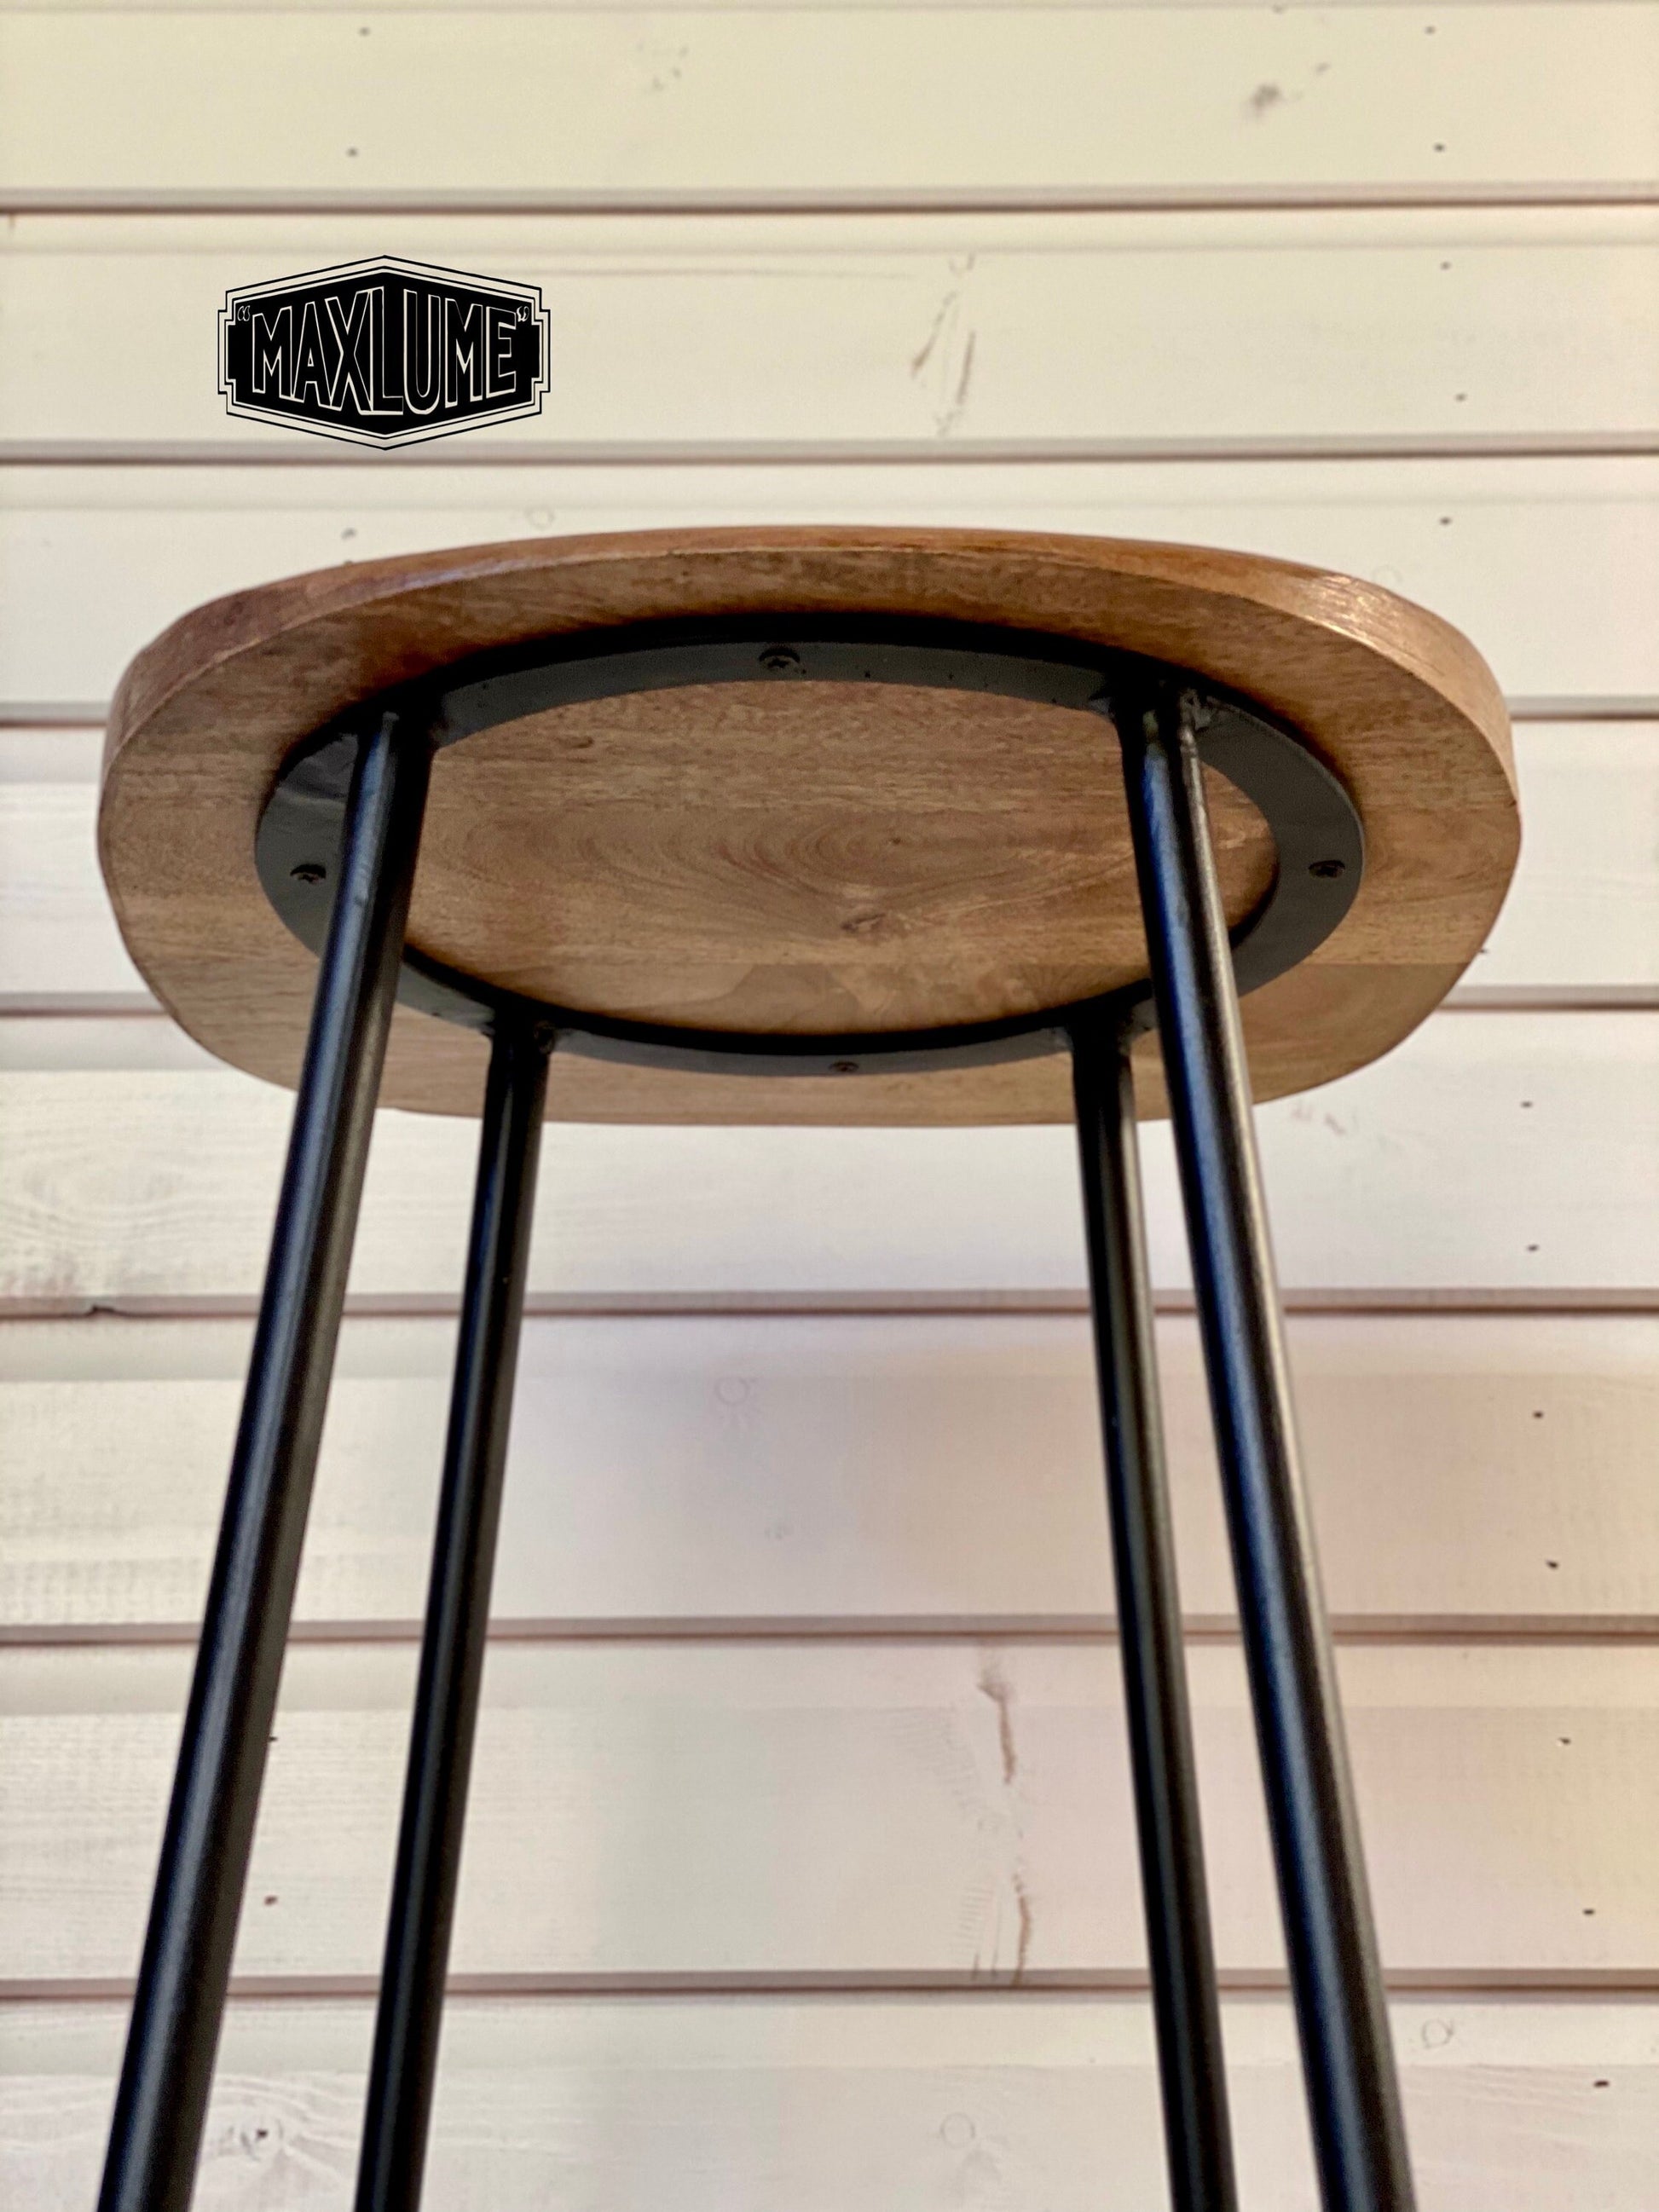 Solid Mango Short Wooden Top Bar Stool | Vintage Style | Floor Standing | Kitchen Black Cat Iron Metal | Industrial Tractor Seat